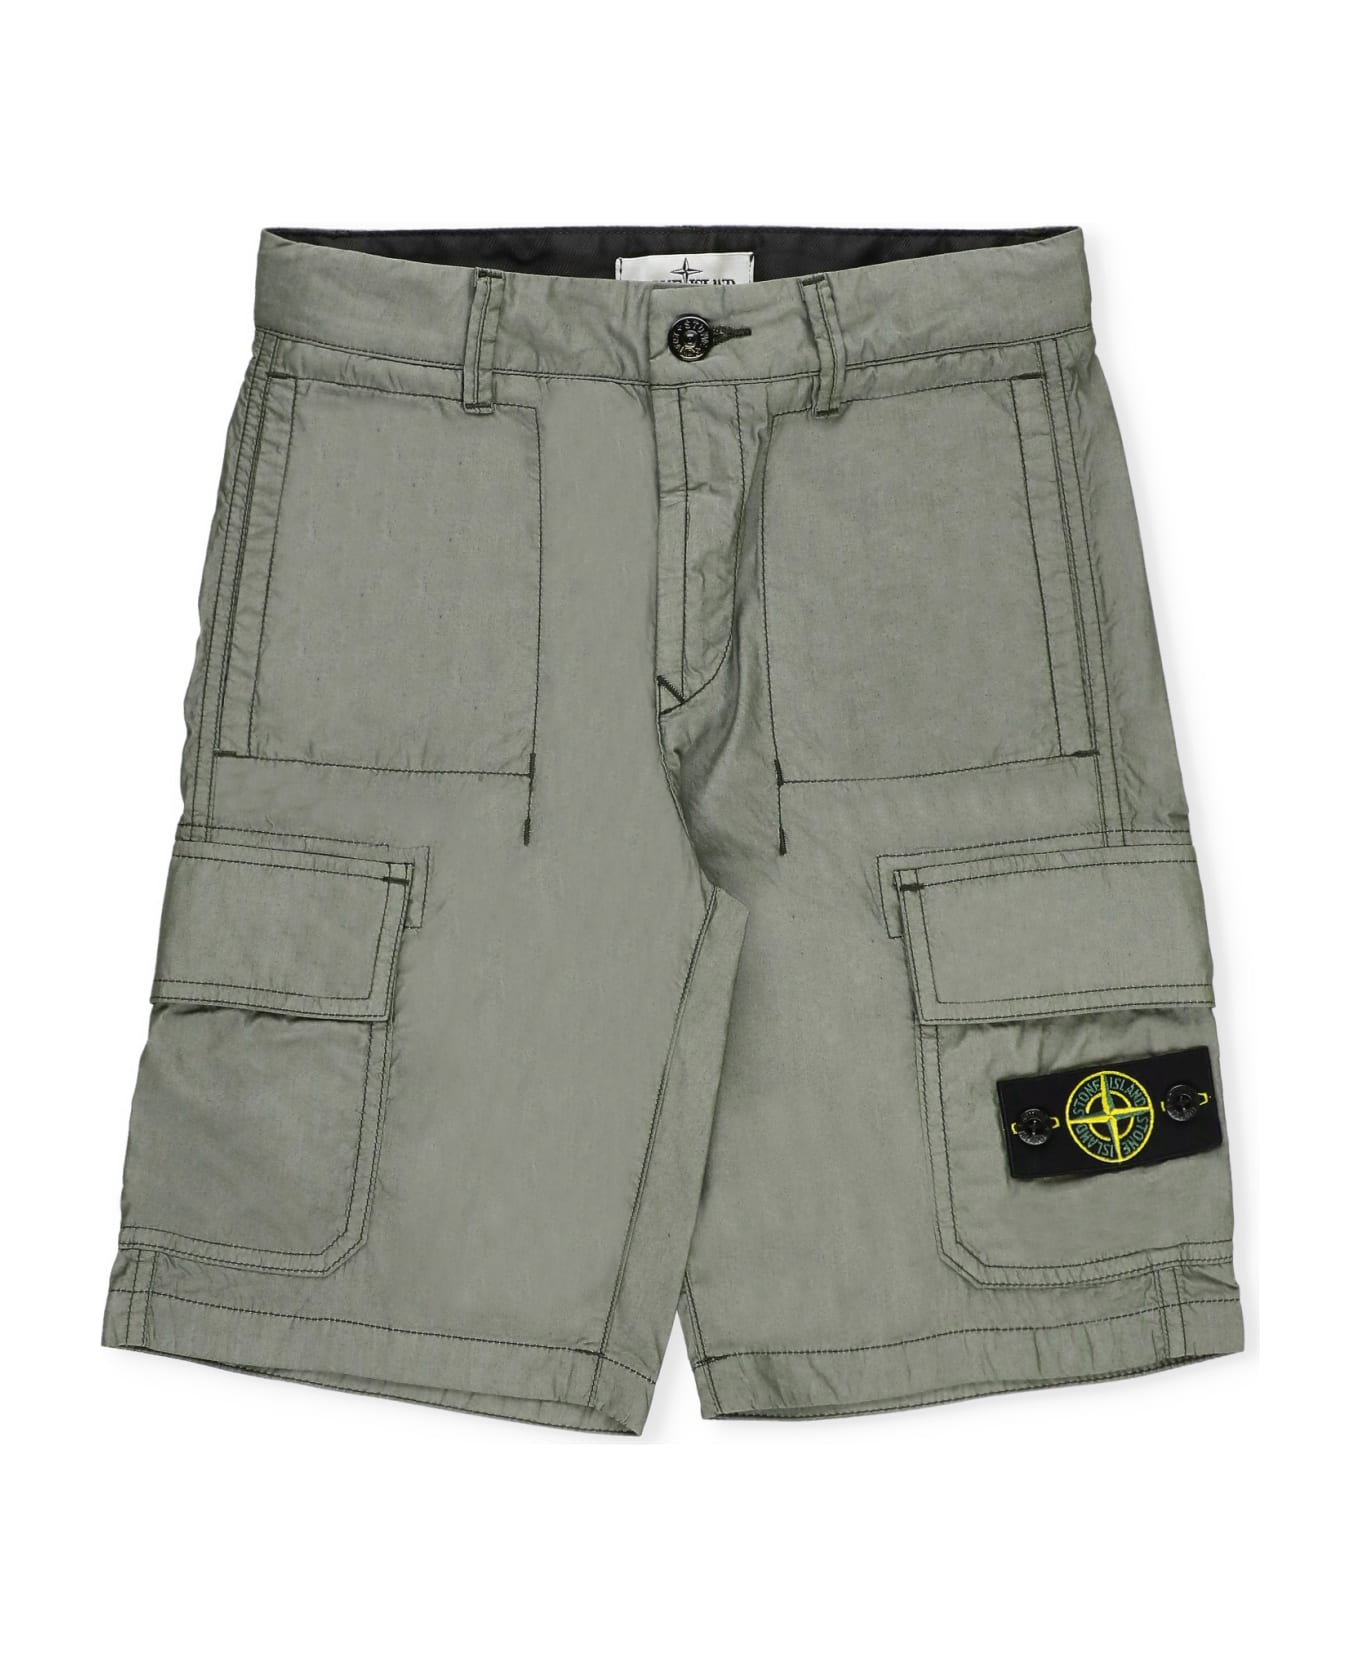 Stone Island Cotton Bermuda Shorts - Green ボトムス